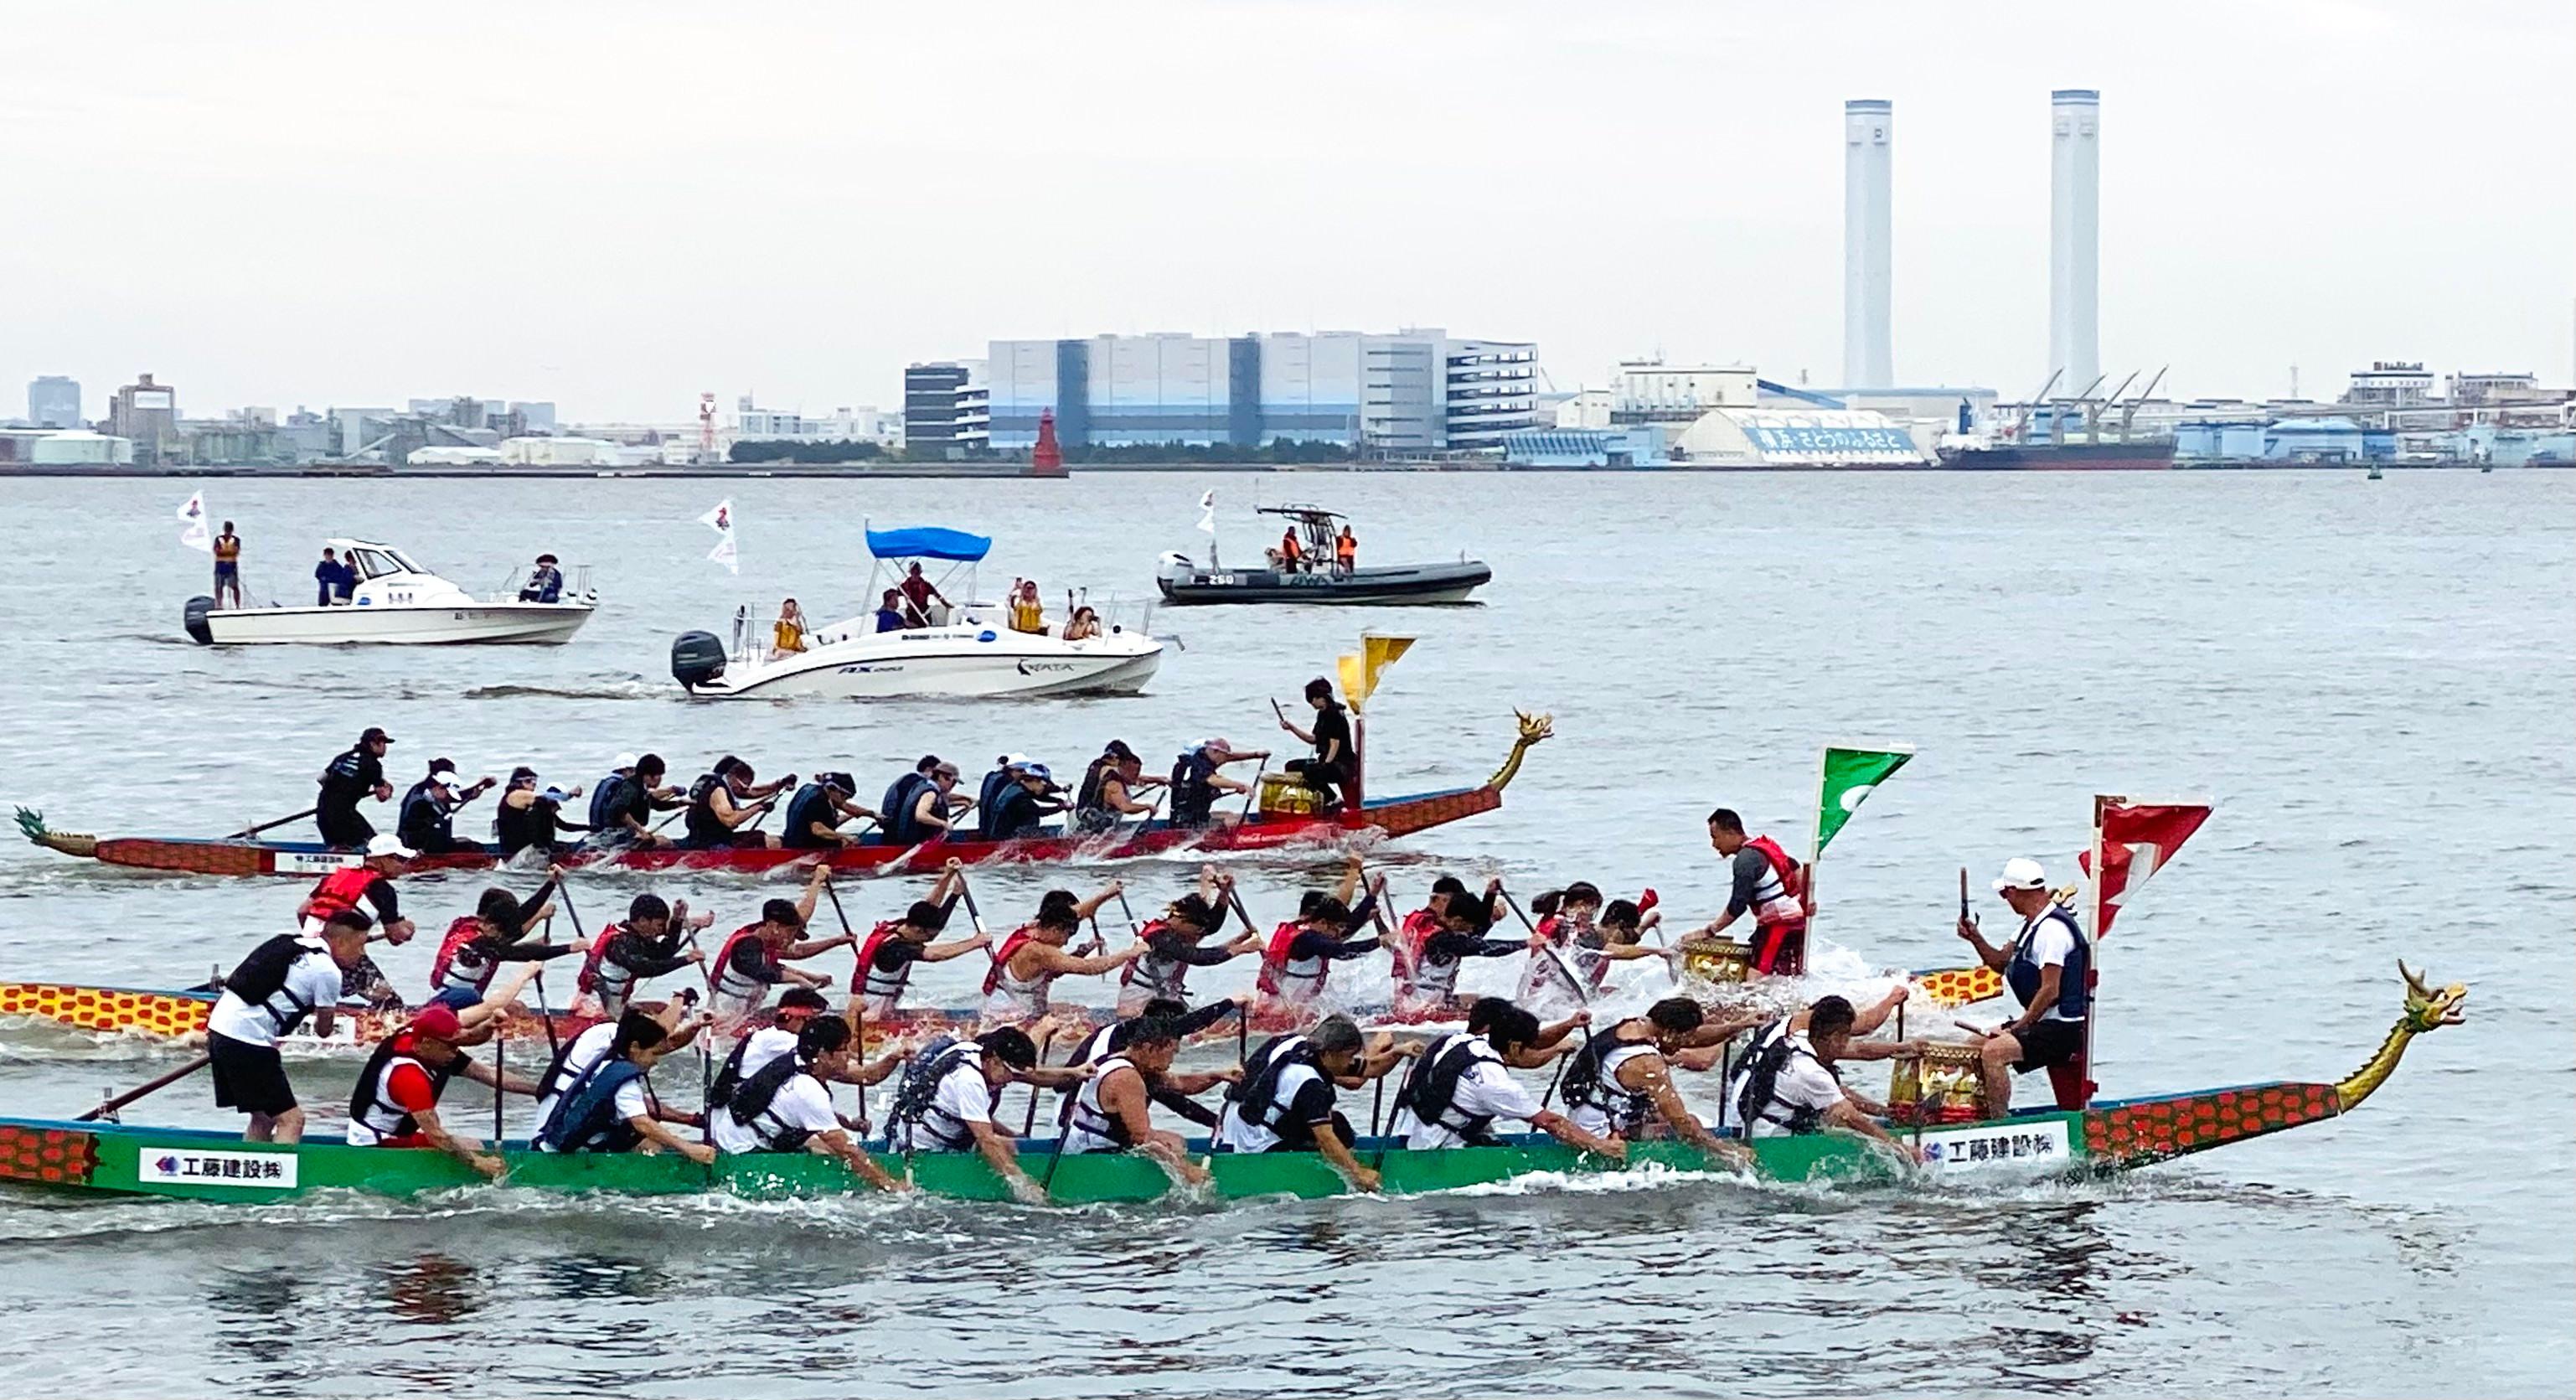 The Hong Kong Cup dragon boat race was held at the promenade of Yamashita Park in Yokohama, Japan, today (June 4). Photo shows paddlers competing for the Hong Kong Cup at the Yokohama Dragon Boat Races.